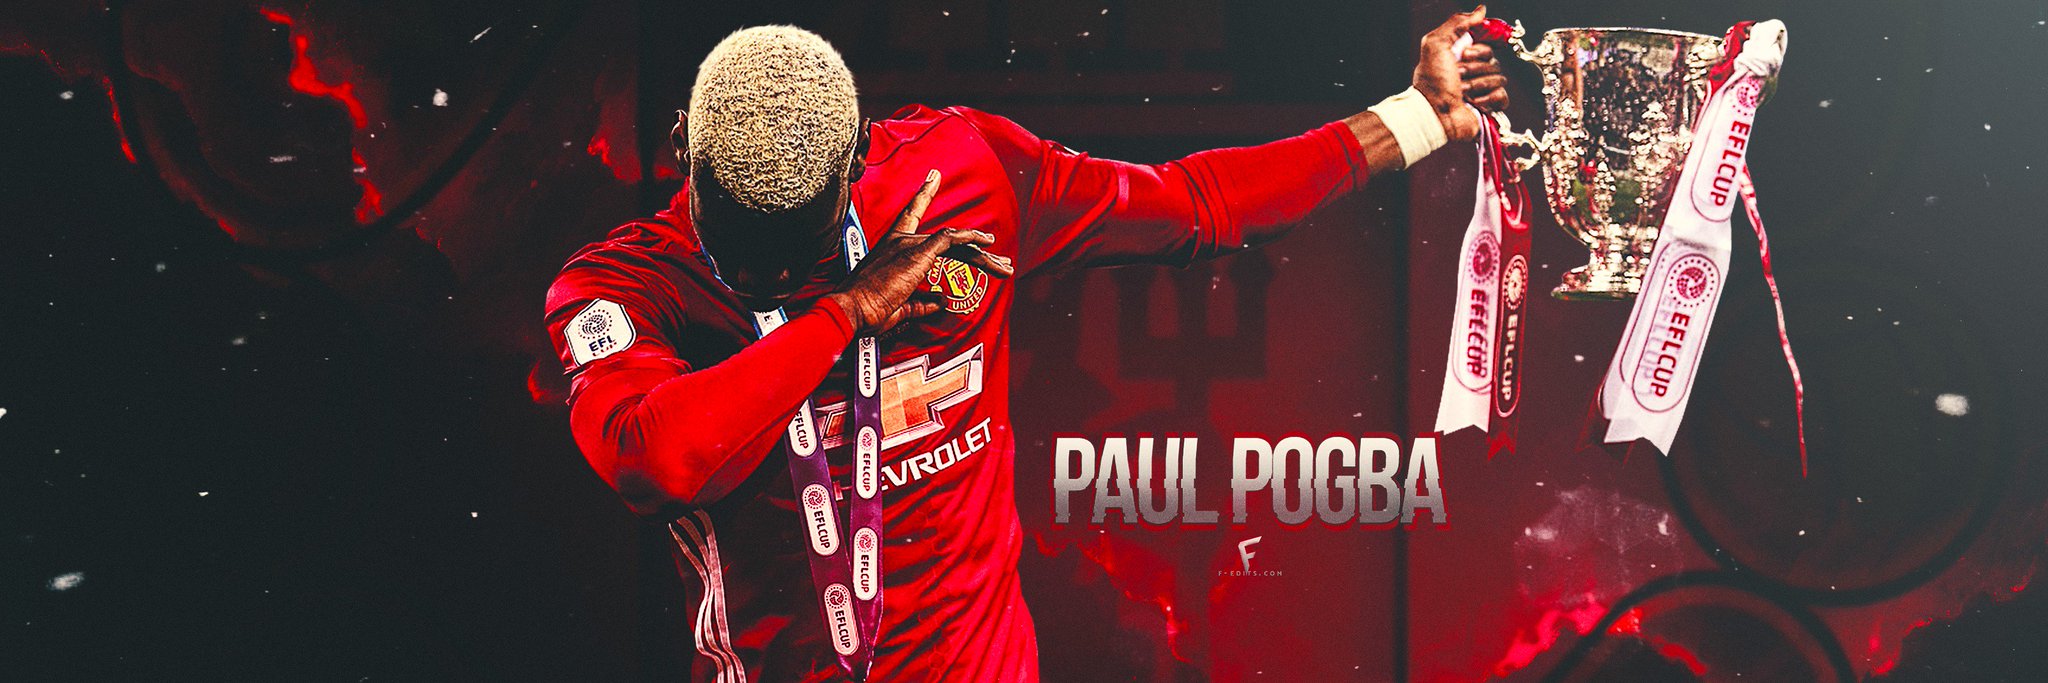 Paul Pogba Wallpaper Dab - HD Wallpaper 